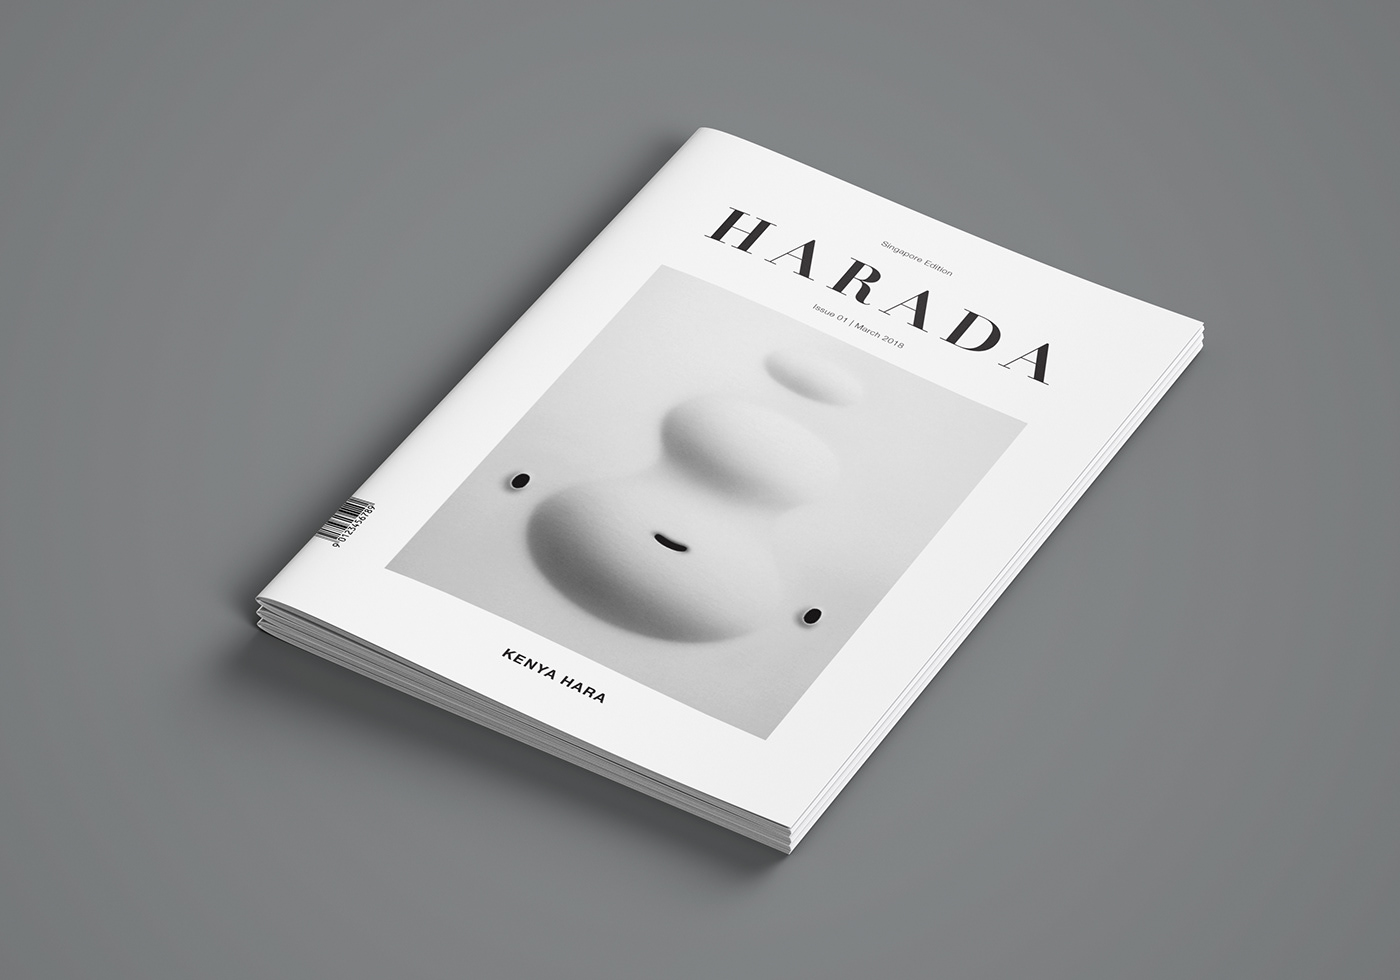 magazine Kenya Hara designer Layout